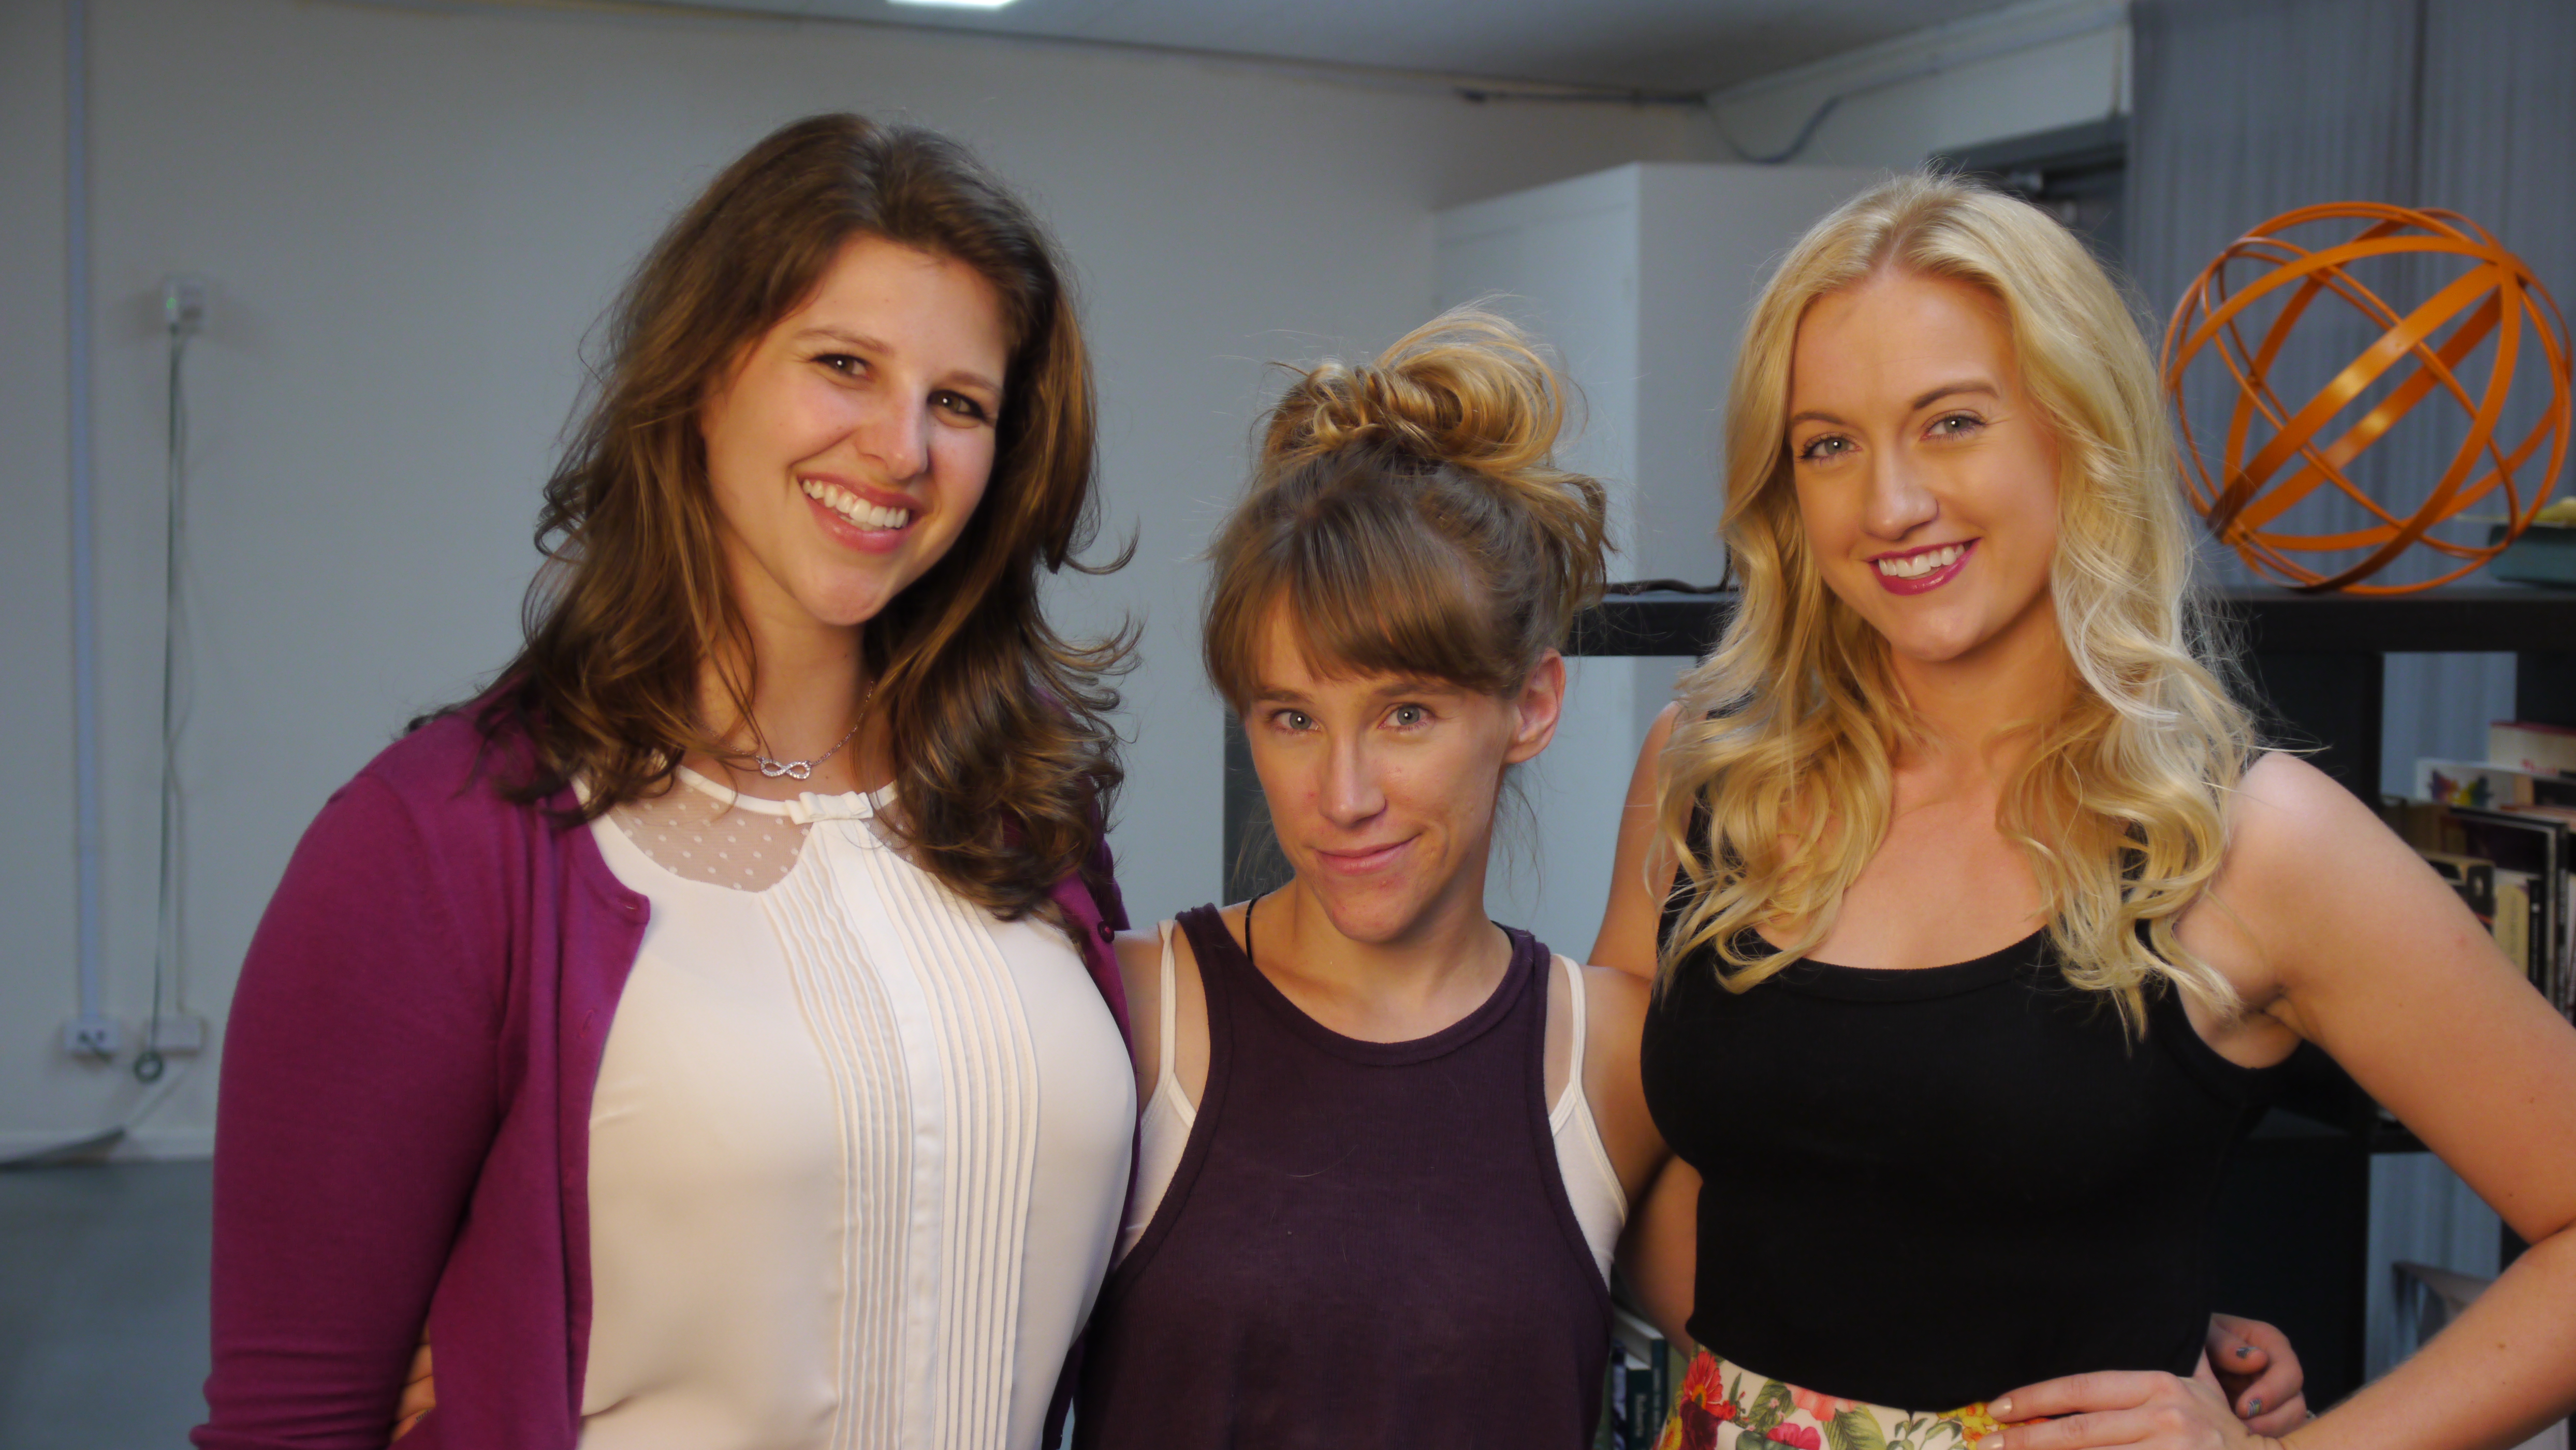 Actresses Laura Linda Bradley and Lindsey Schubert with Director Erin Brown